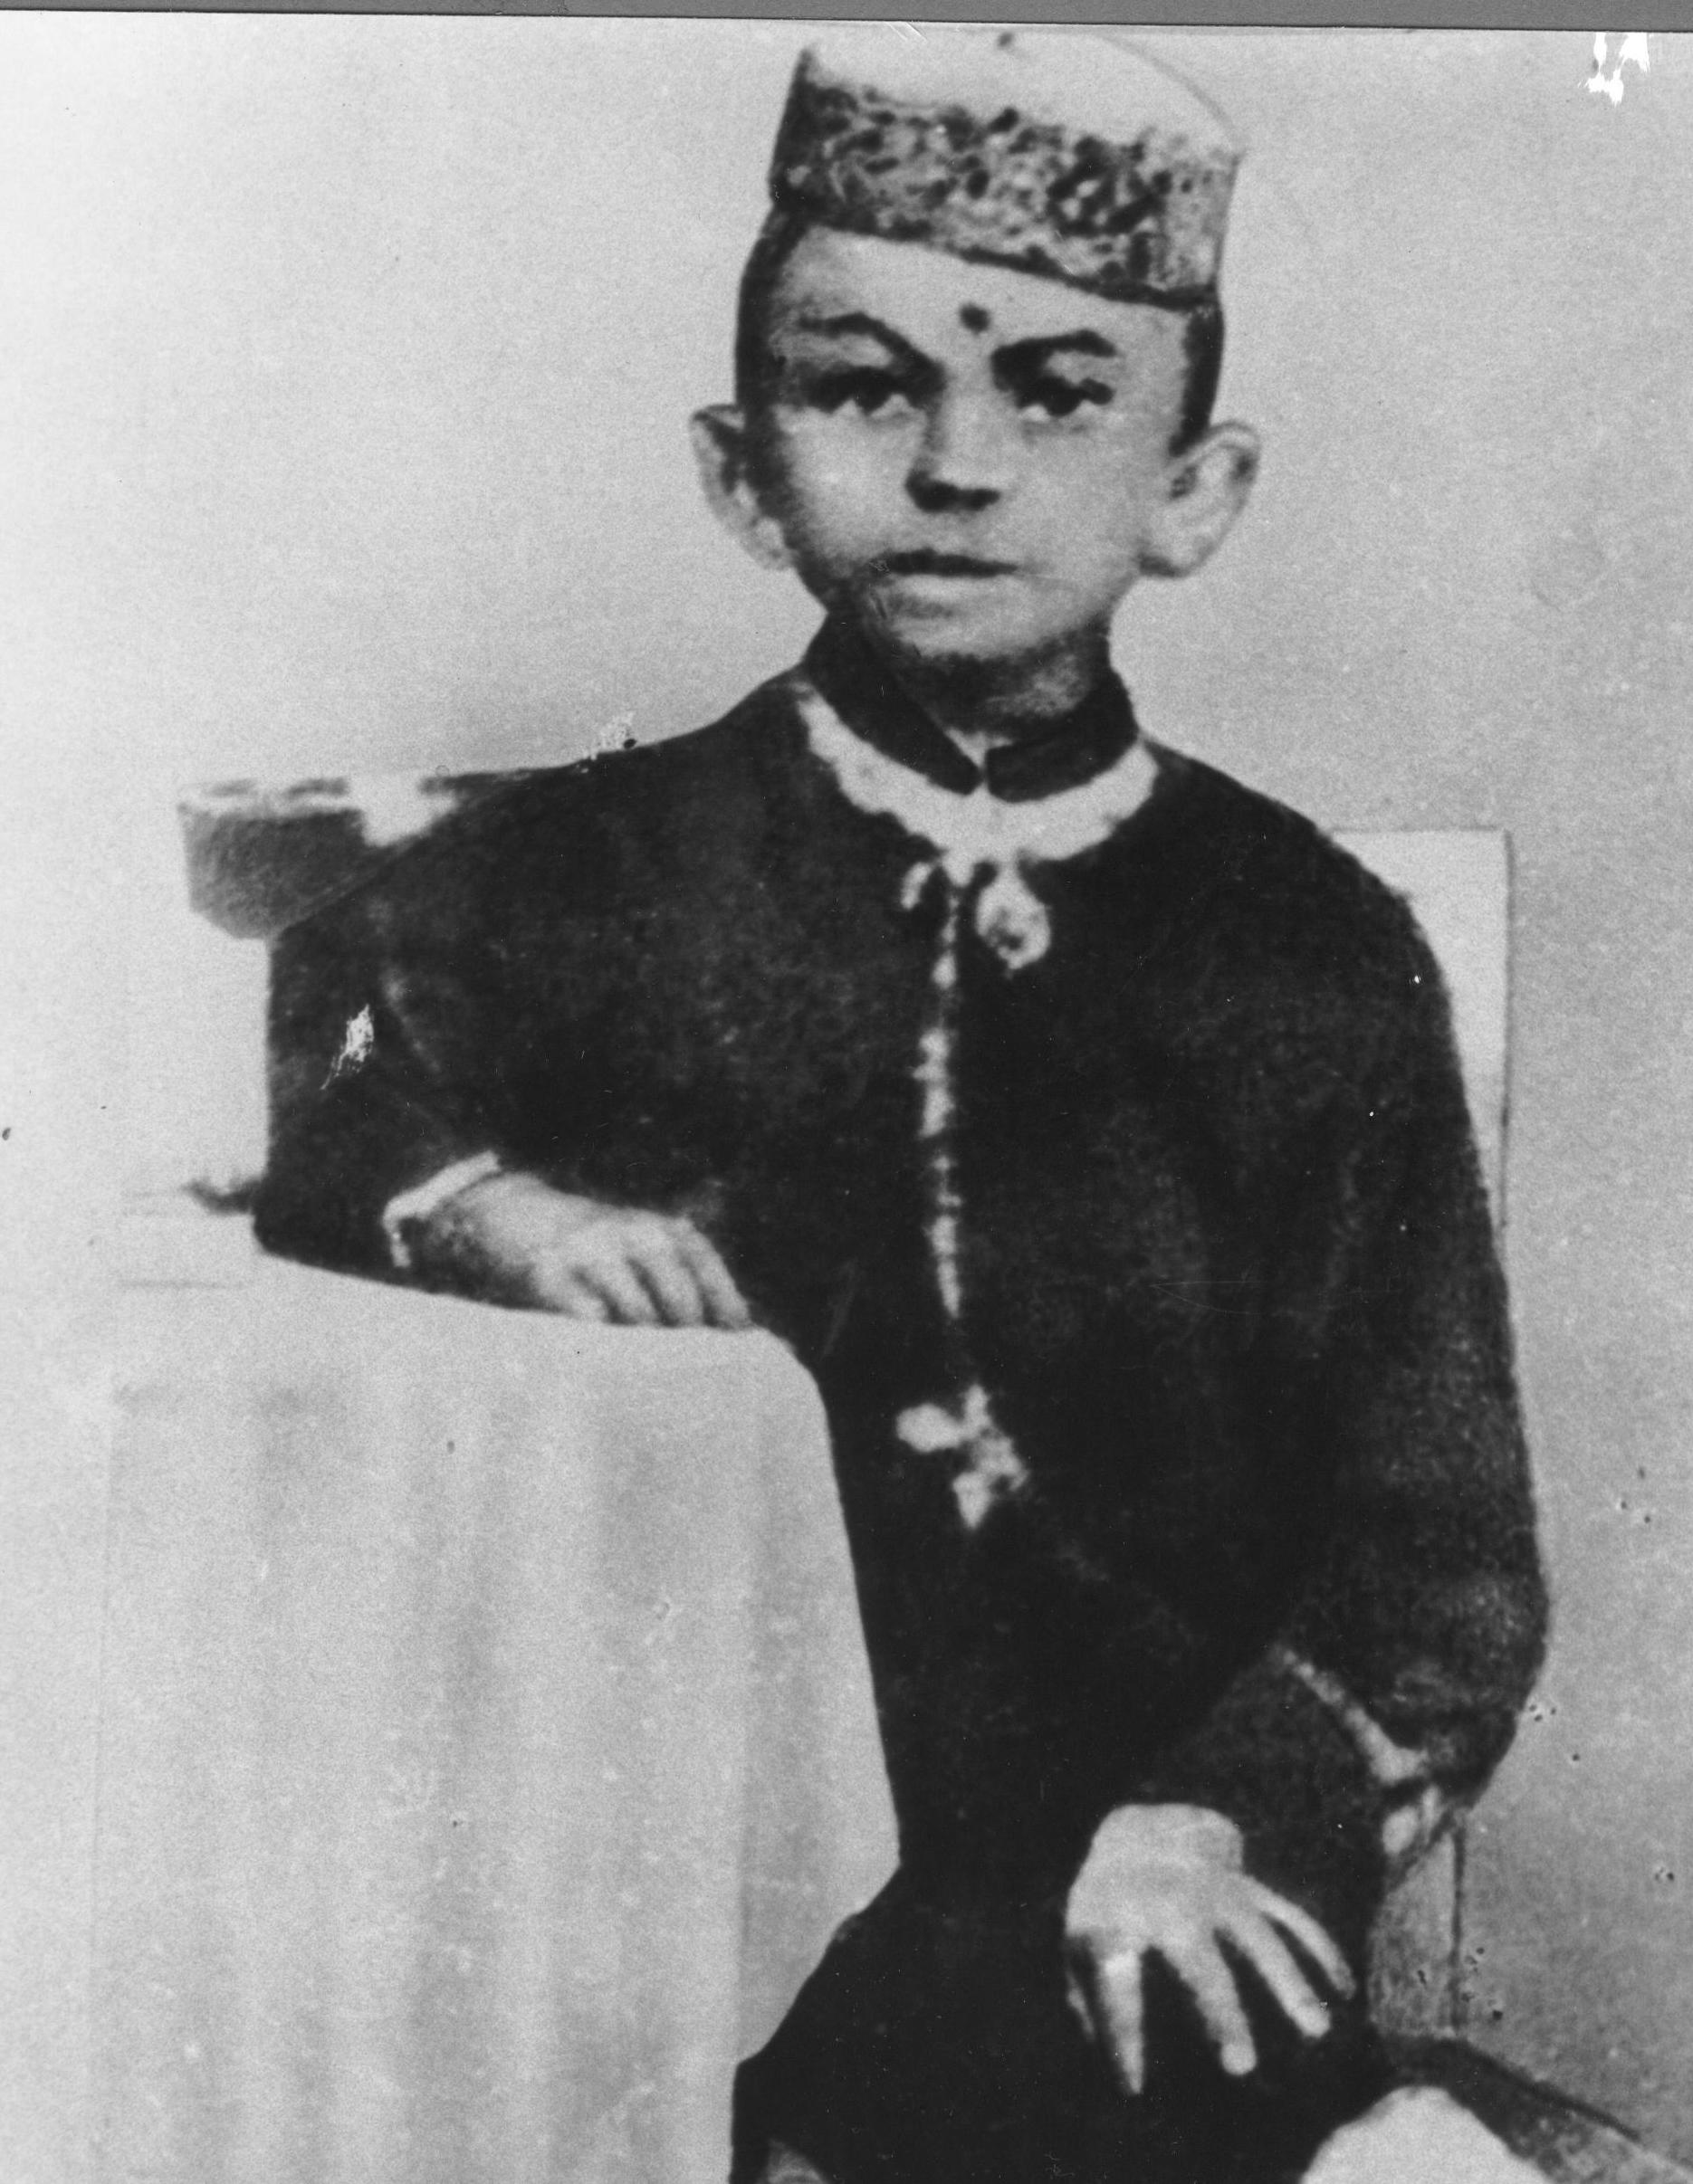 Mohandas K Gandhi, age 7